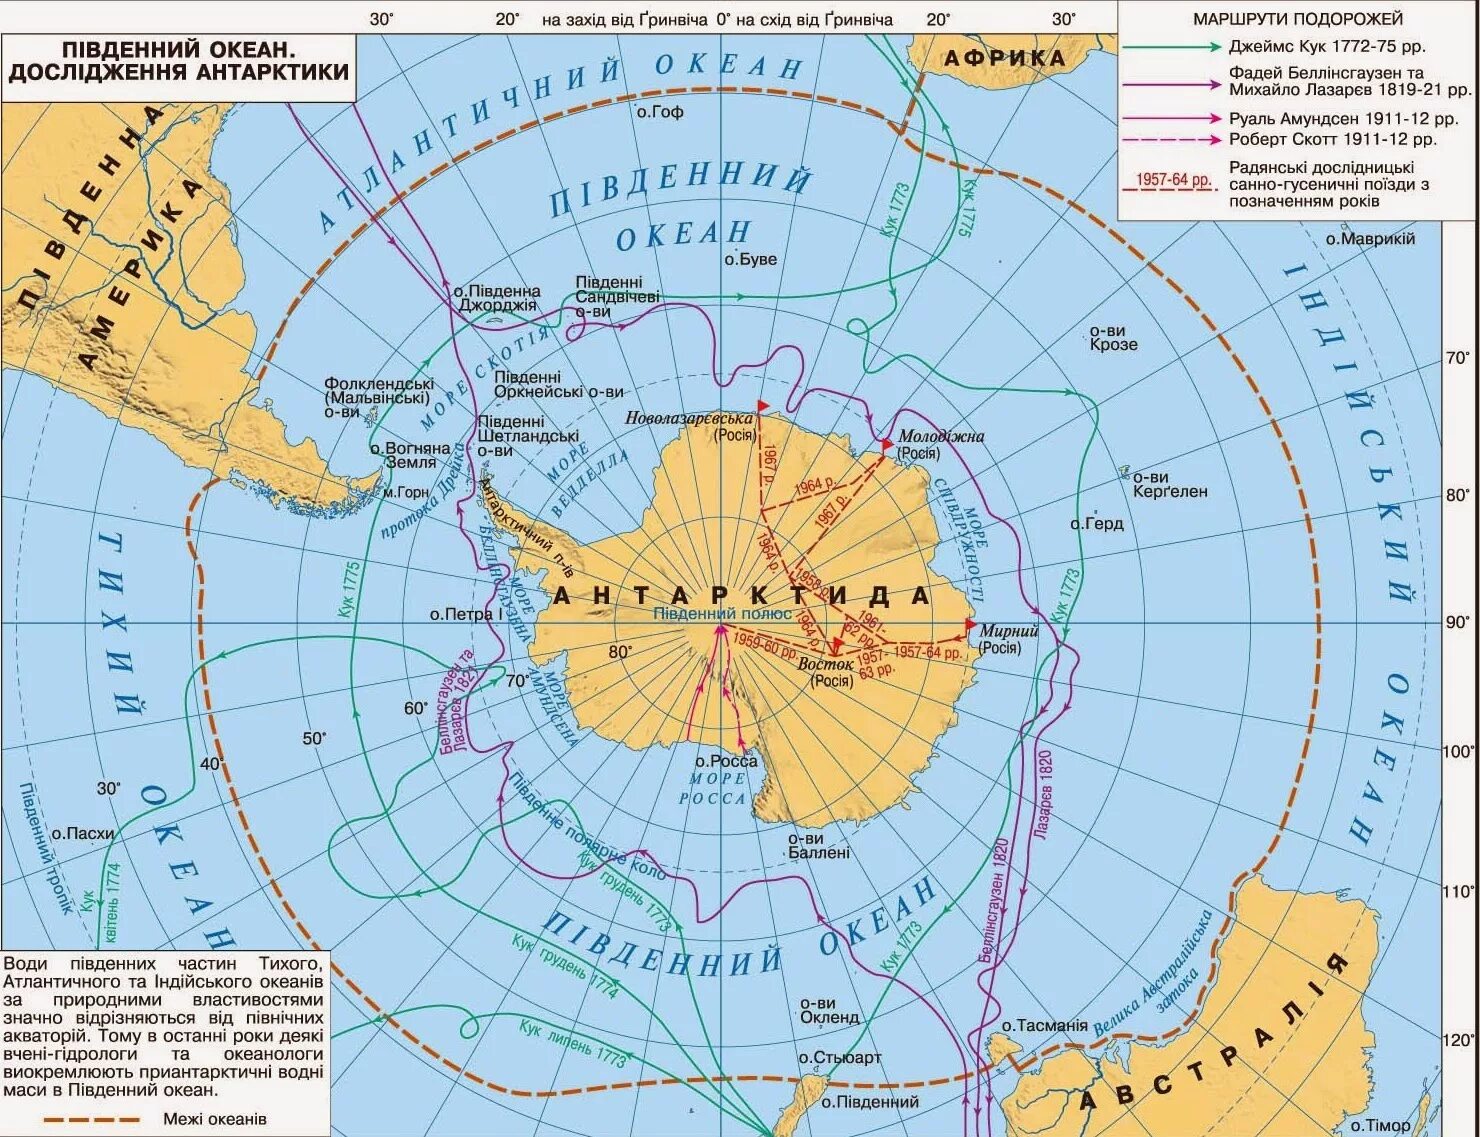 Местоположение антарктиды. Показать на карте Северный Ледовитый океан и Антарктиду. Море Беллинсгаузена — ; море Амундсена —. Границы Южного океана на карте.